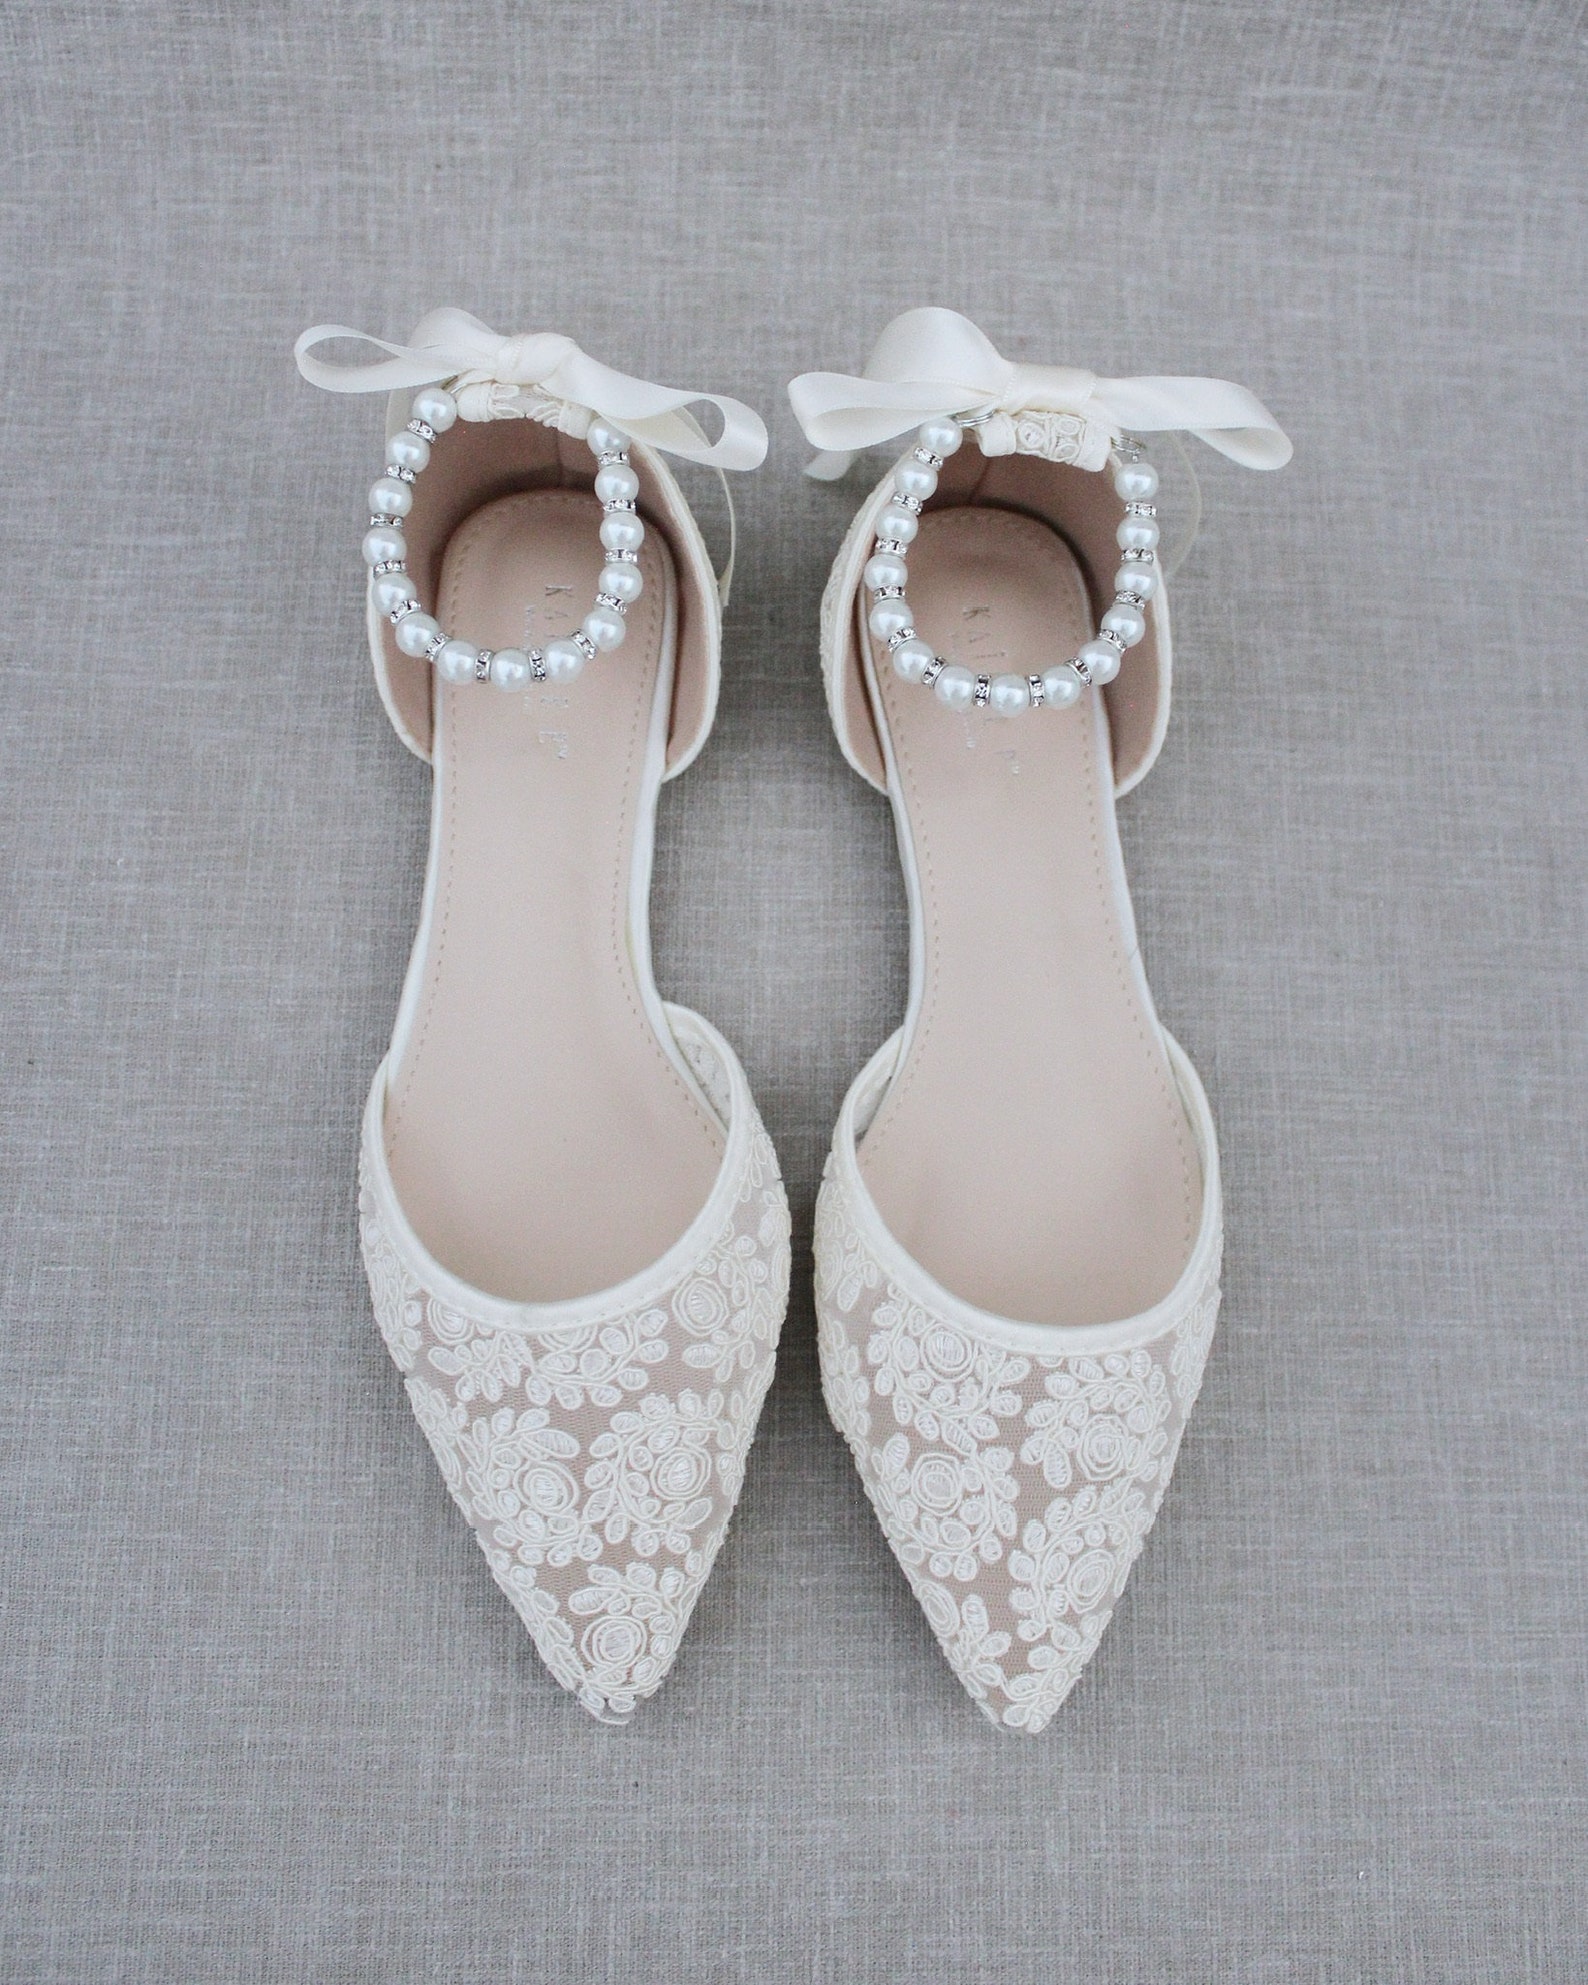 Ivory Crochet Lace Pointy Toe Flats Women Wedding Shoes - Etsy